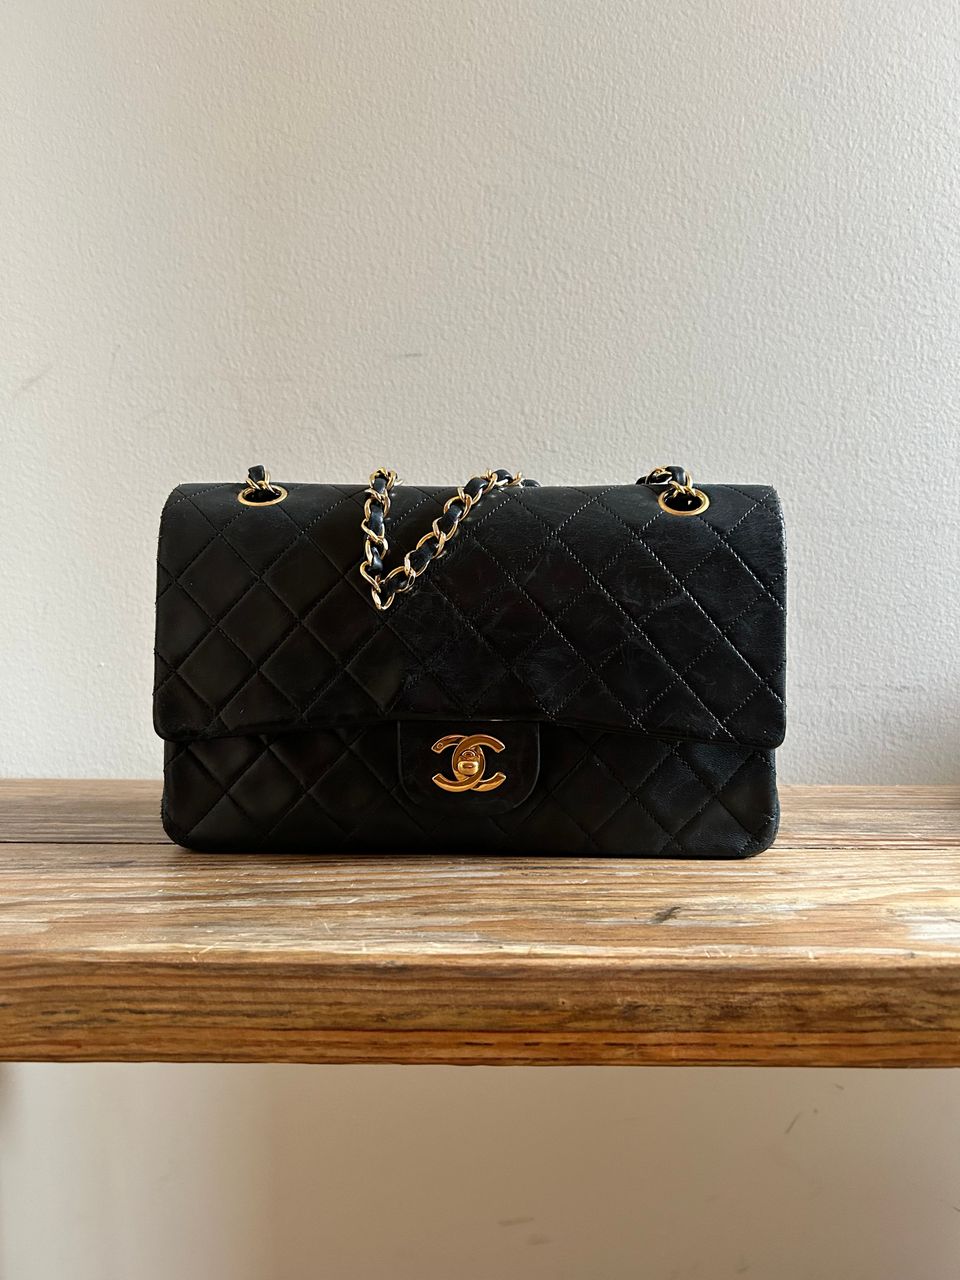 Chanel Vintage Medium Black Lambskin bag (1997)